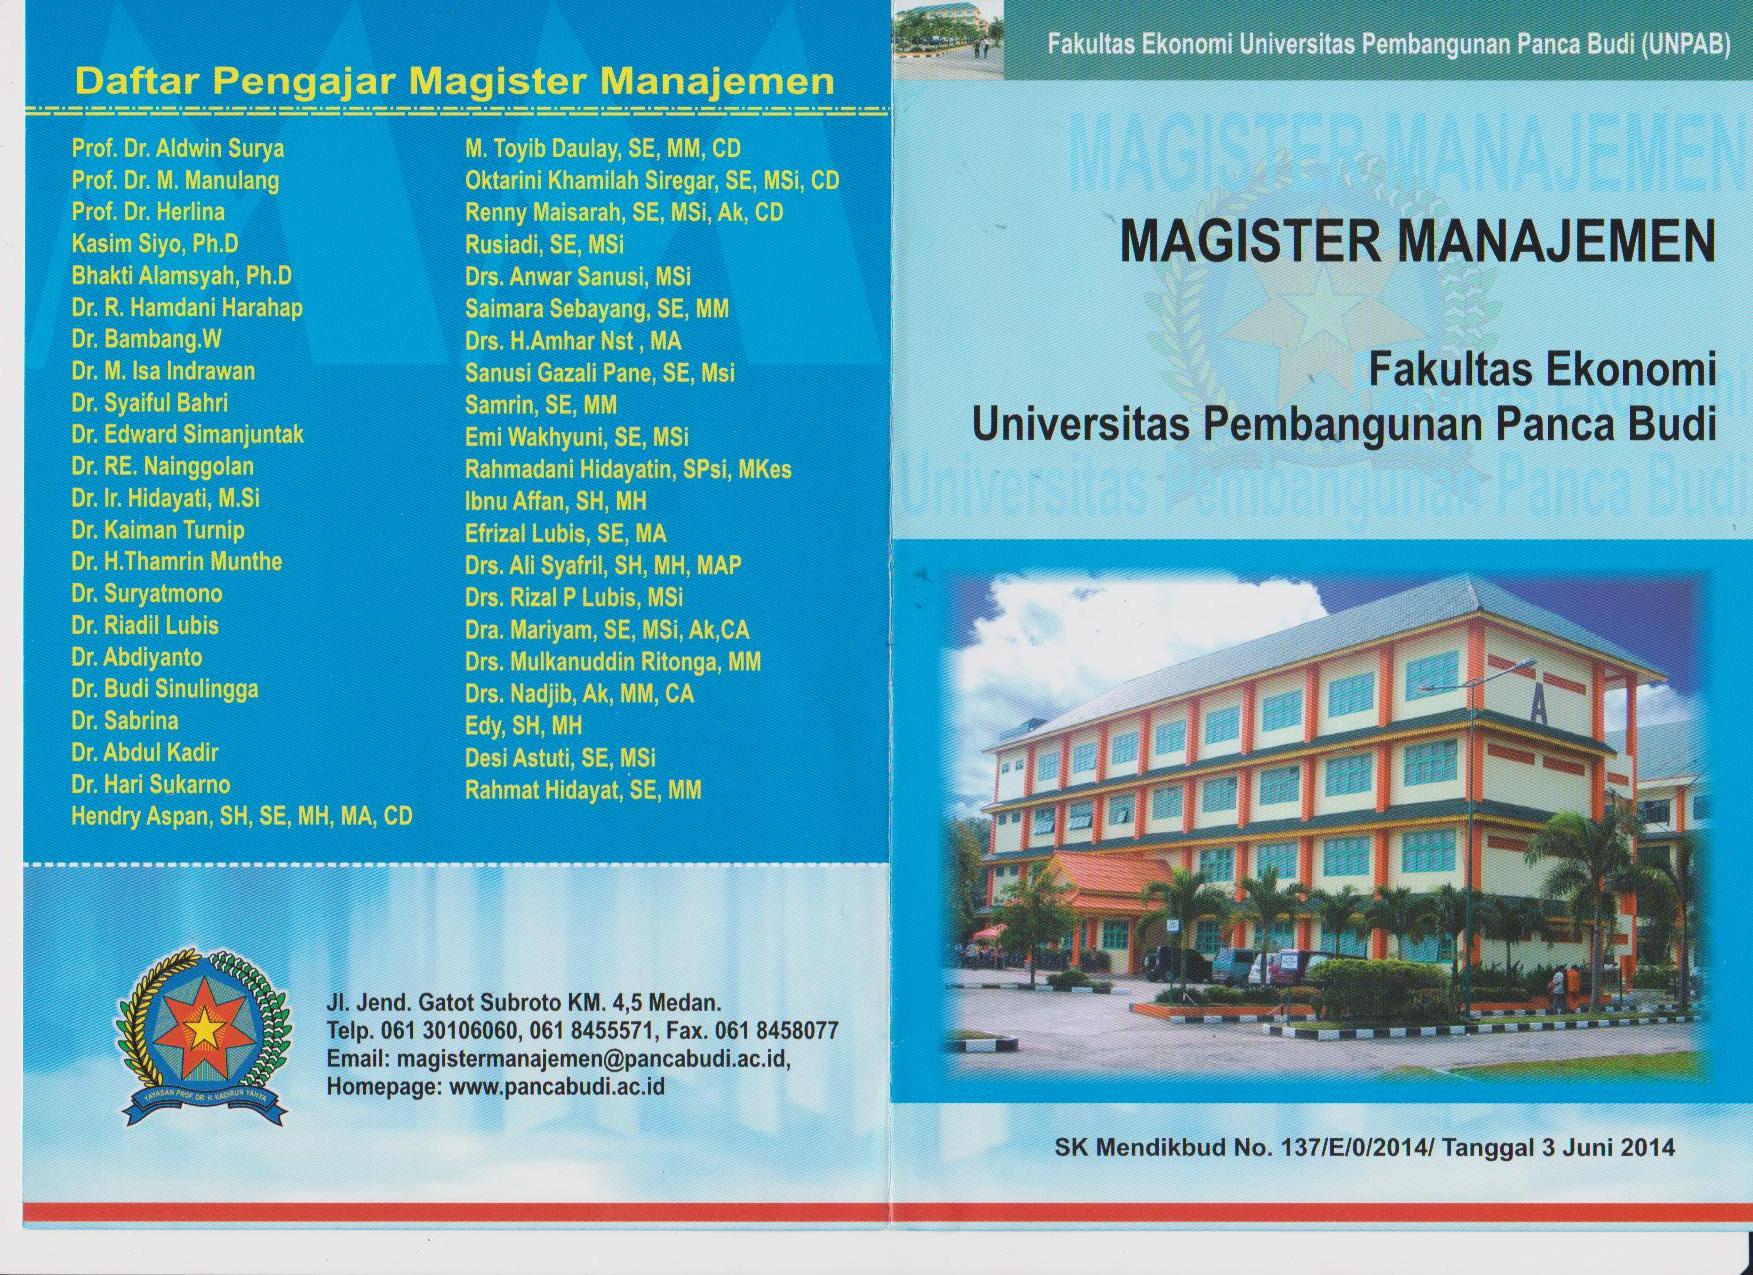 Unpab Program Magister Manajemen Universitas Pembangunan Panca Budi